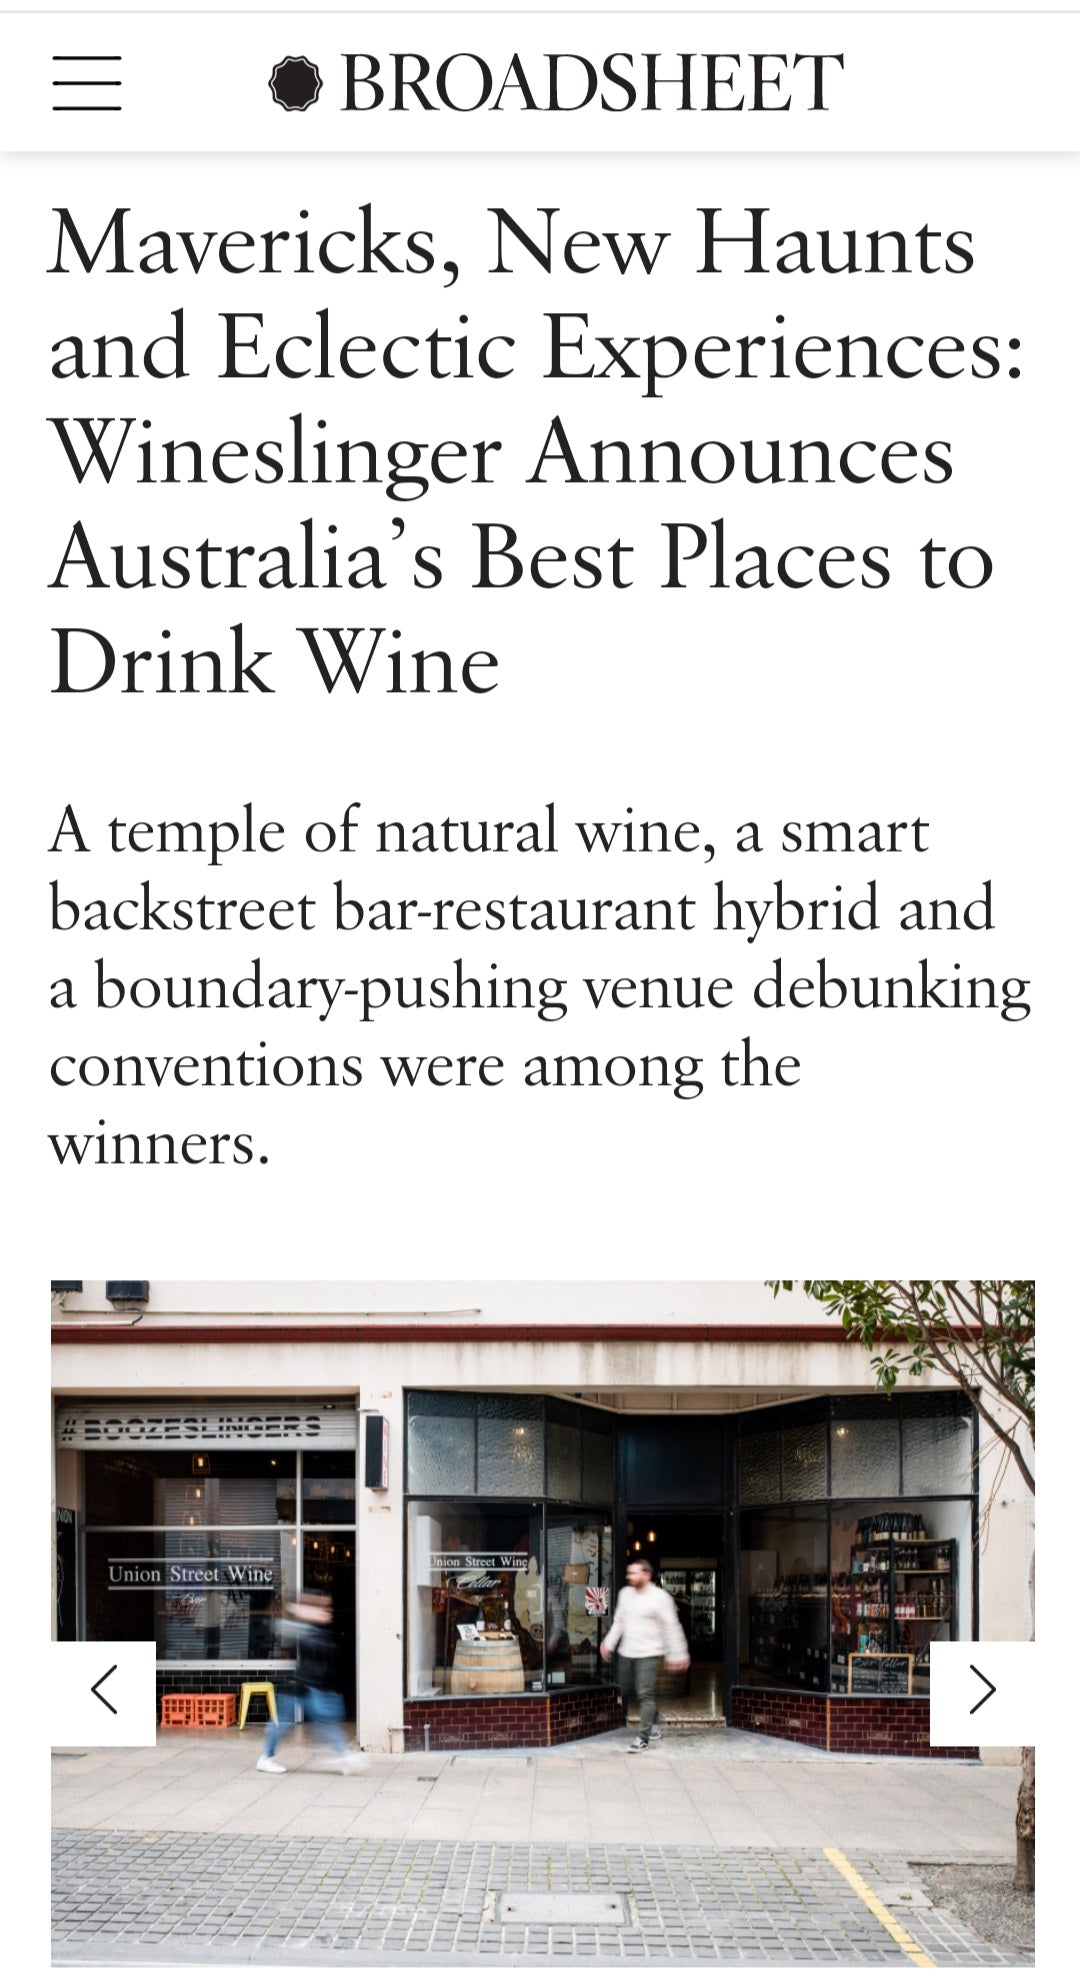 Mavericks, New Haunts and Eclectic Experiences: Wineslinger Announces Australia’s Best Places to Drink Wine